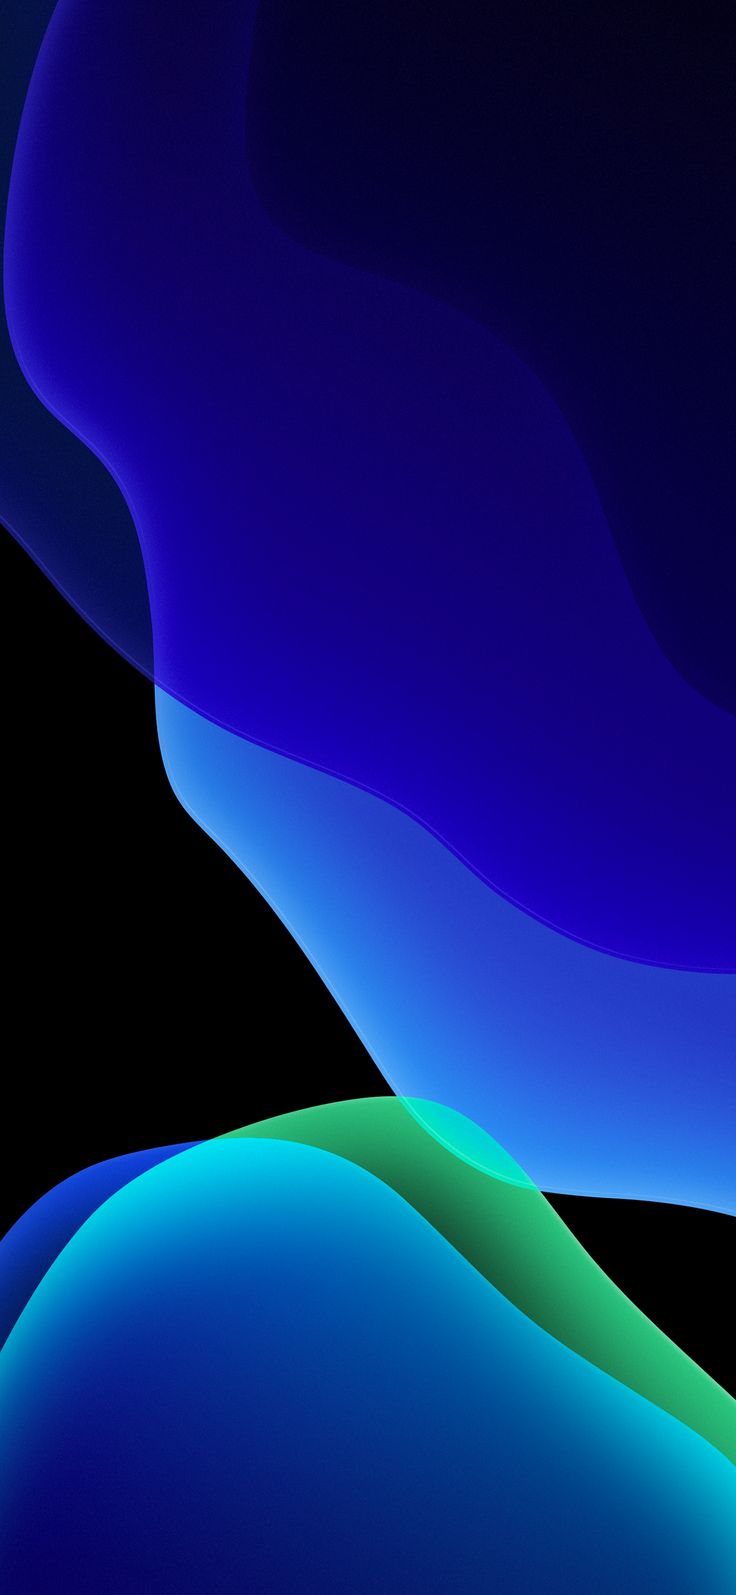  Apple IPhone Hintergrundbild 736x1595. iOS 13 Wallpaper HQ. Dark mode wallpaper iphone, Blue wallpaper iphone, Android wallpaper